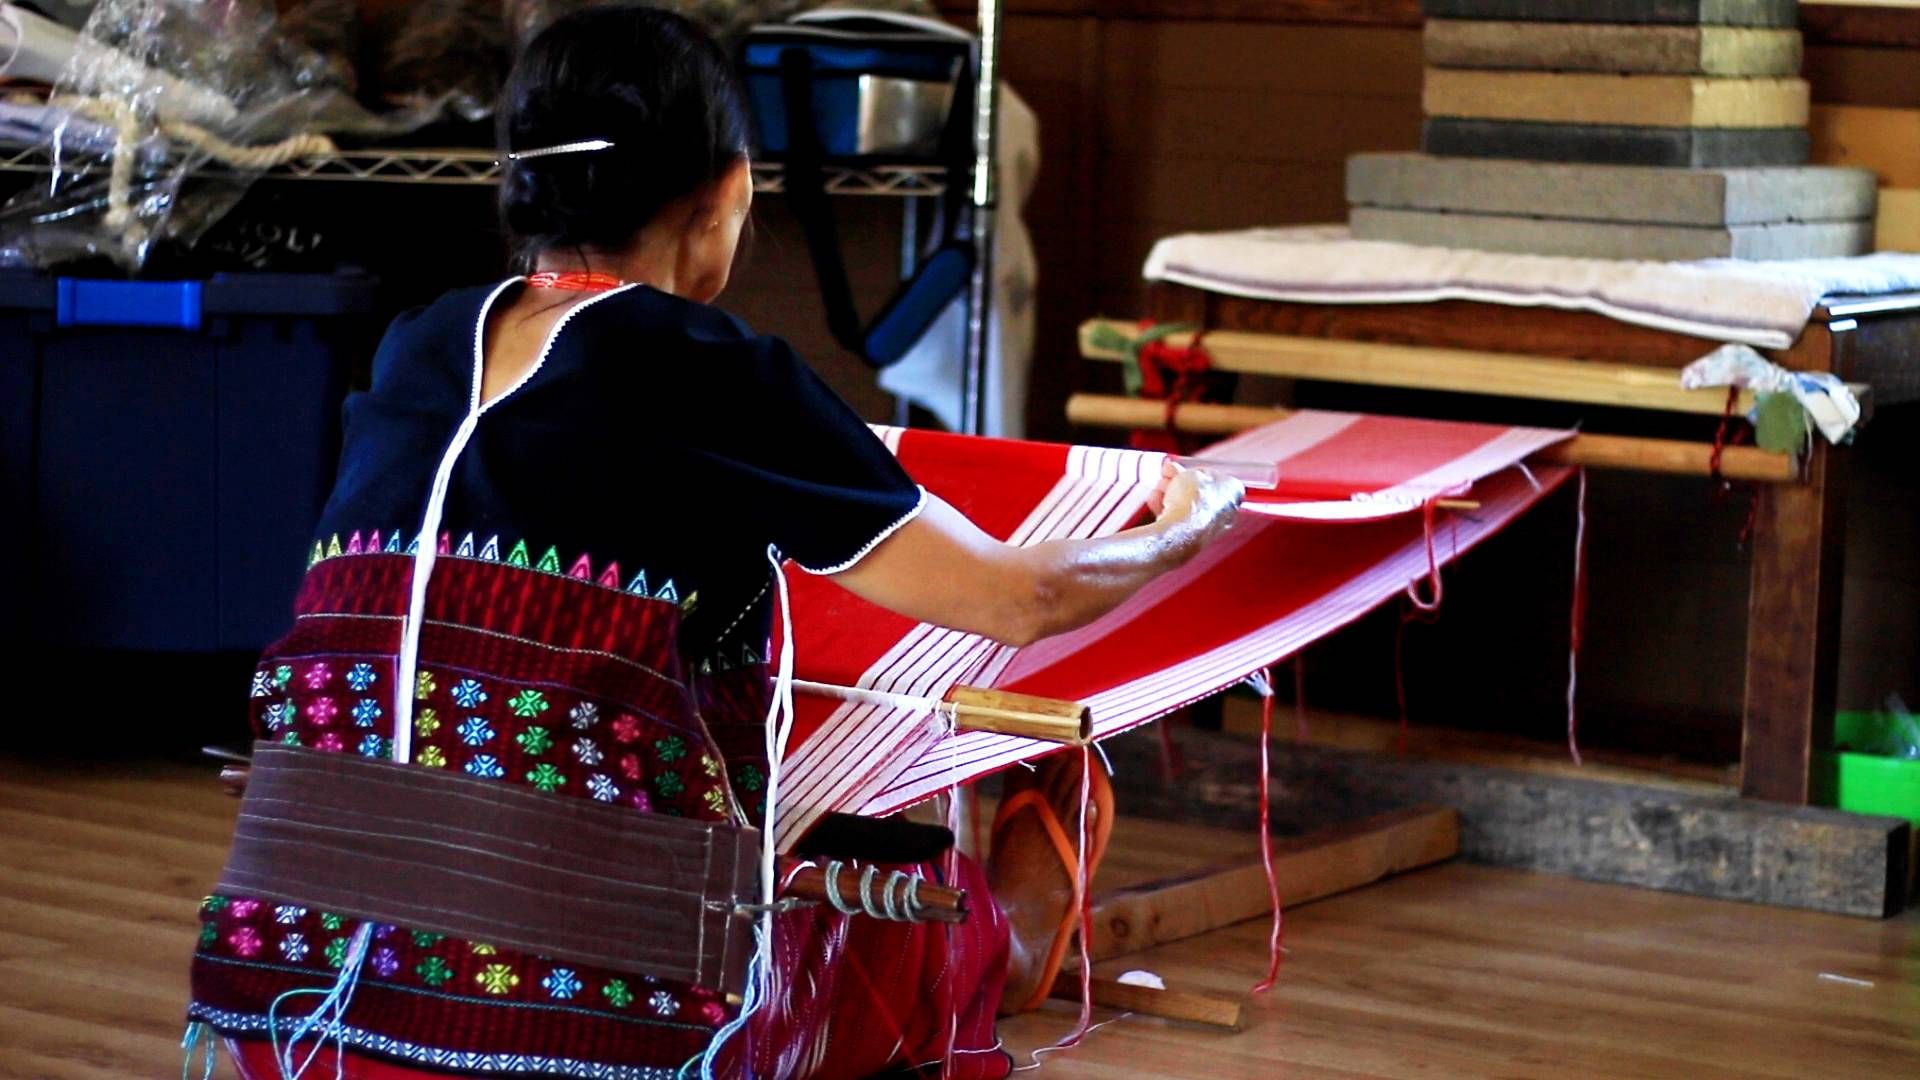 Paw weaving on her backstrap loom.